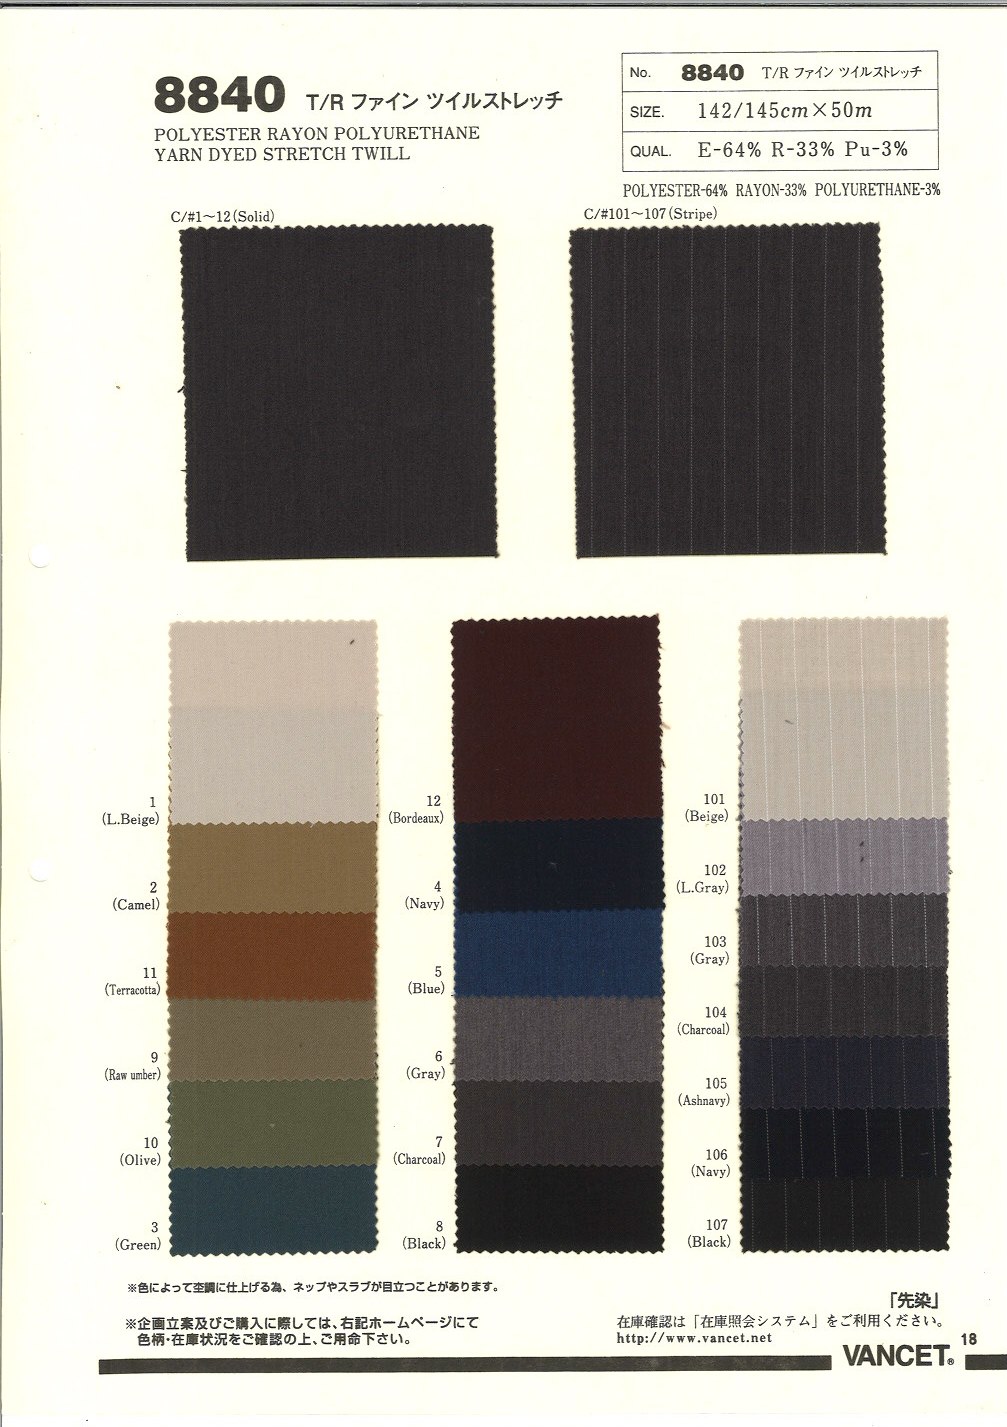 8840 T/R Feinköper-Stretch[Textilgewebe] VANCET